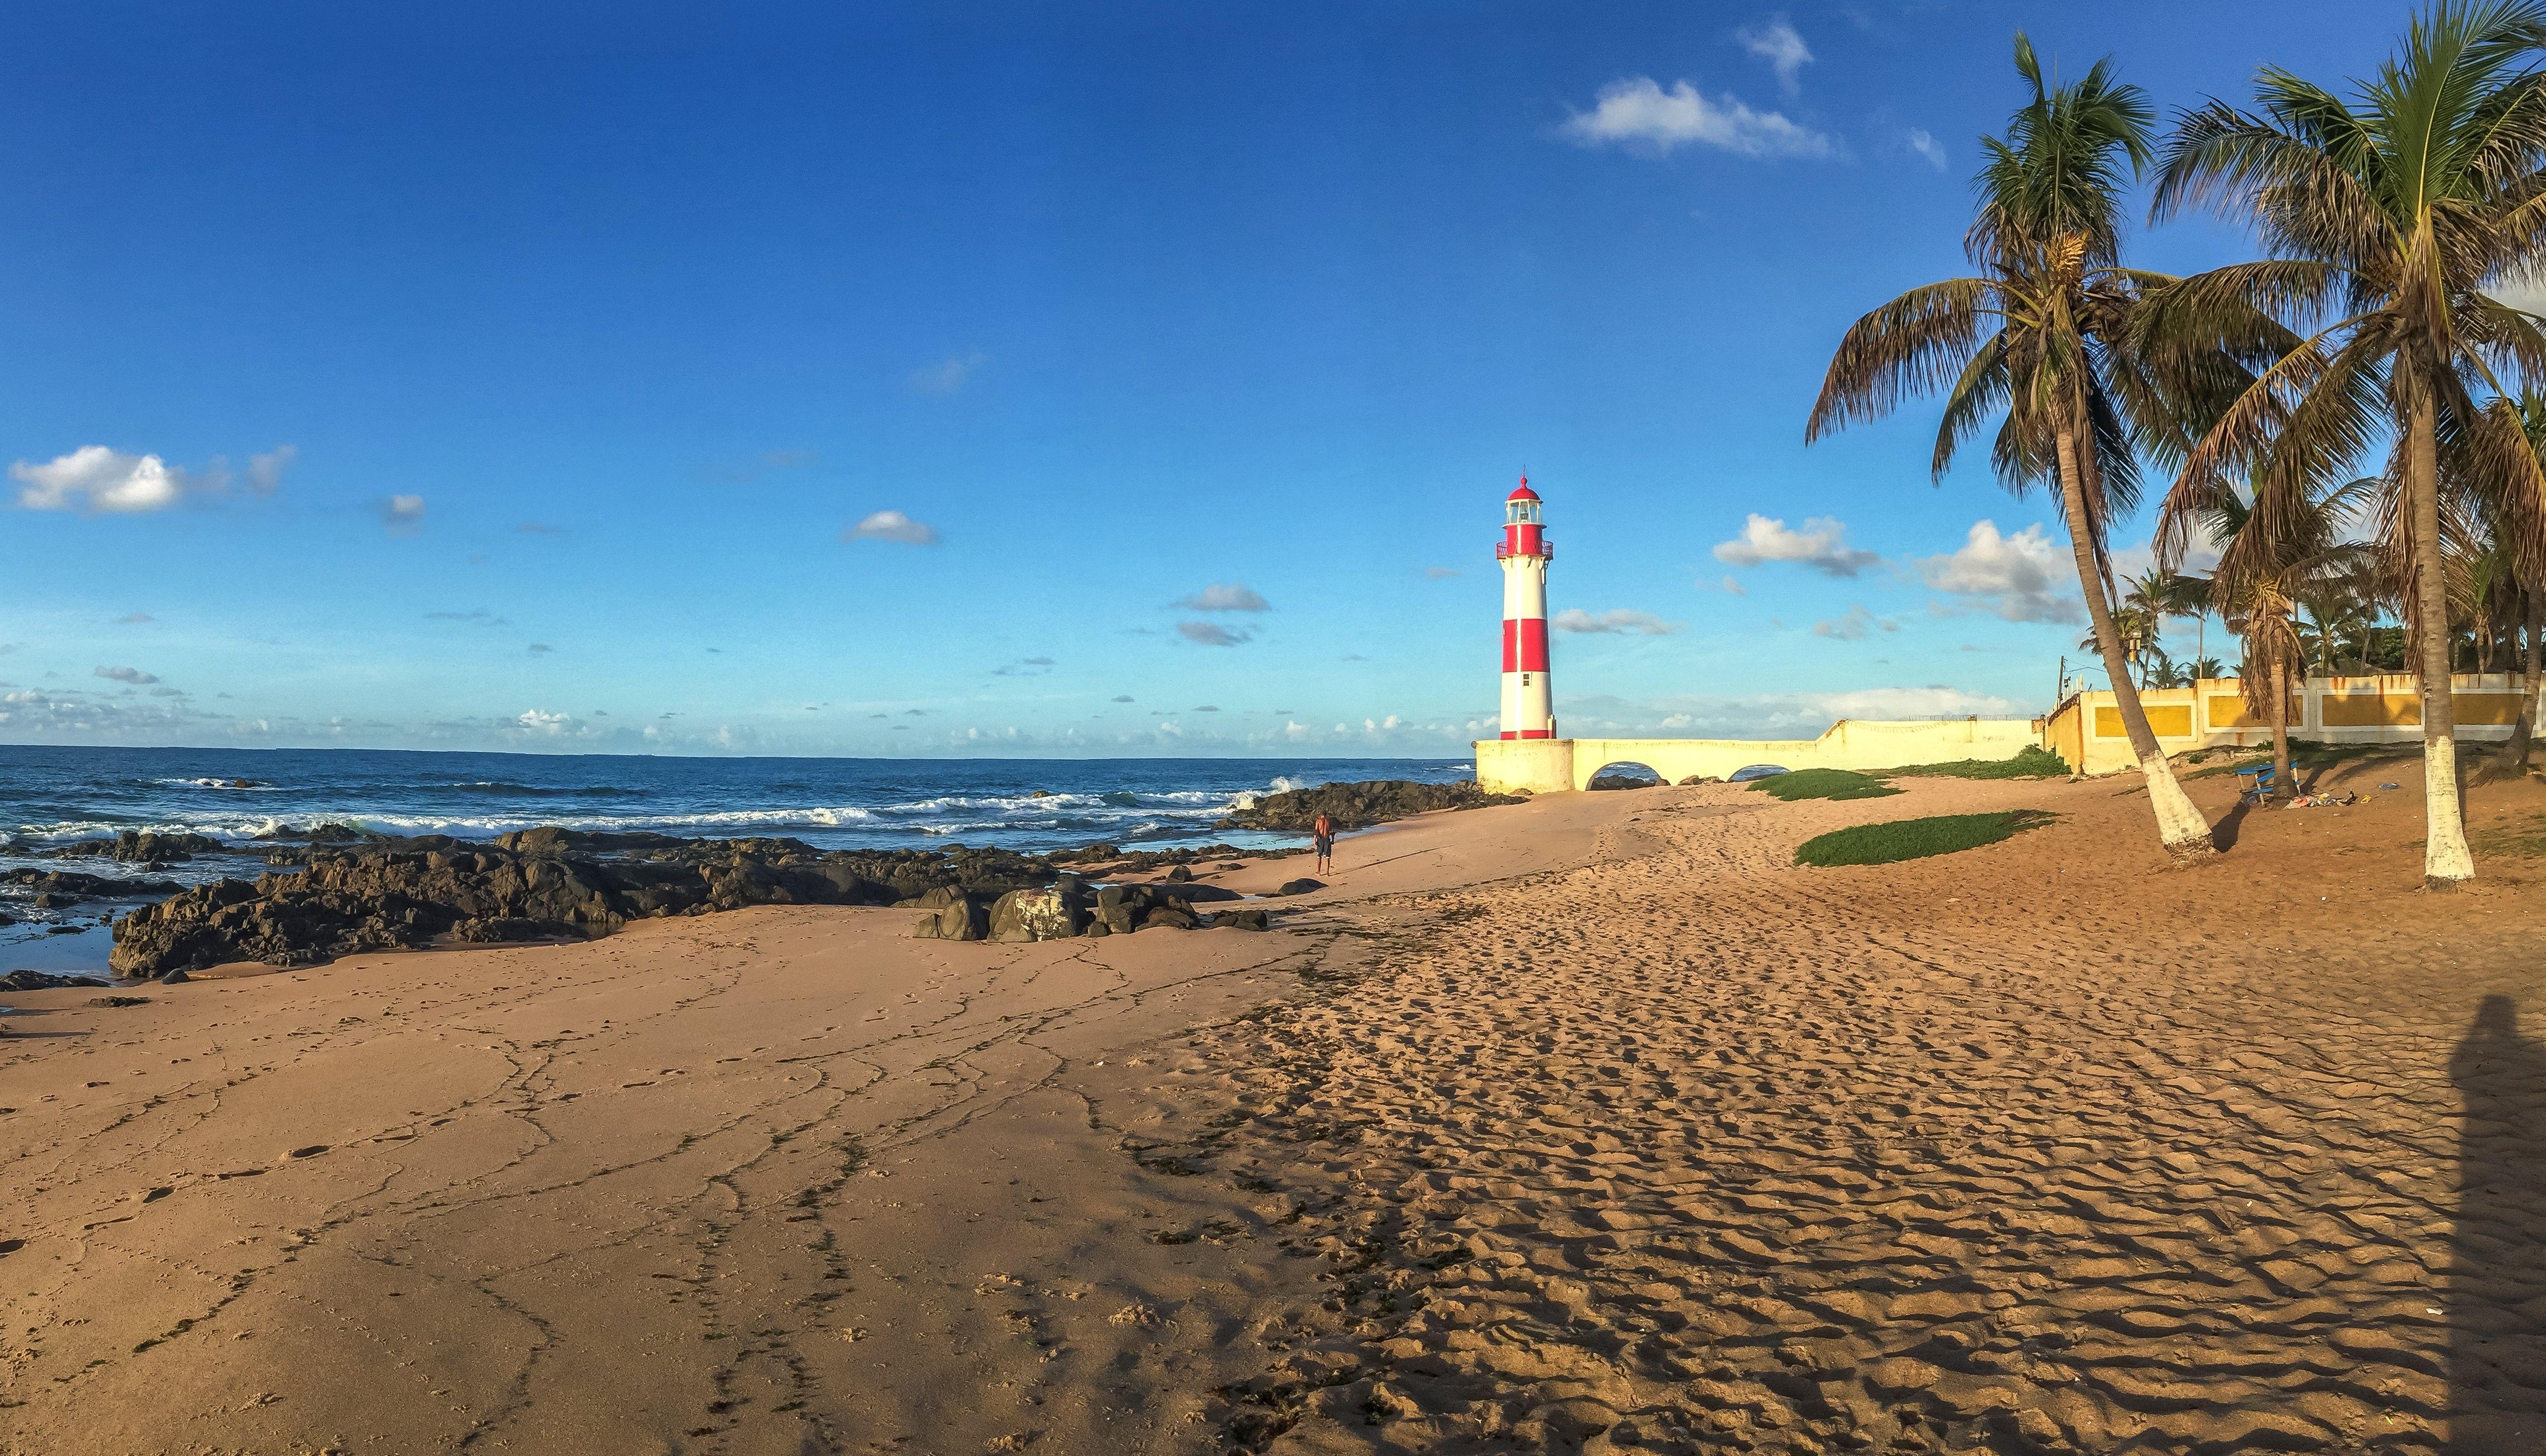 Beaches: Salvador Brazil Lighthouses Palma Sky Coast Beach Scenery